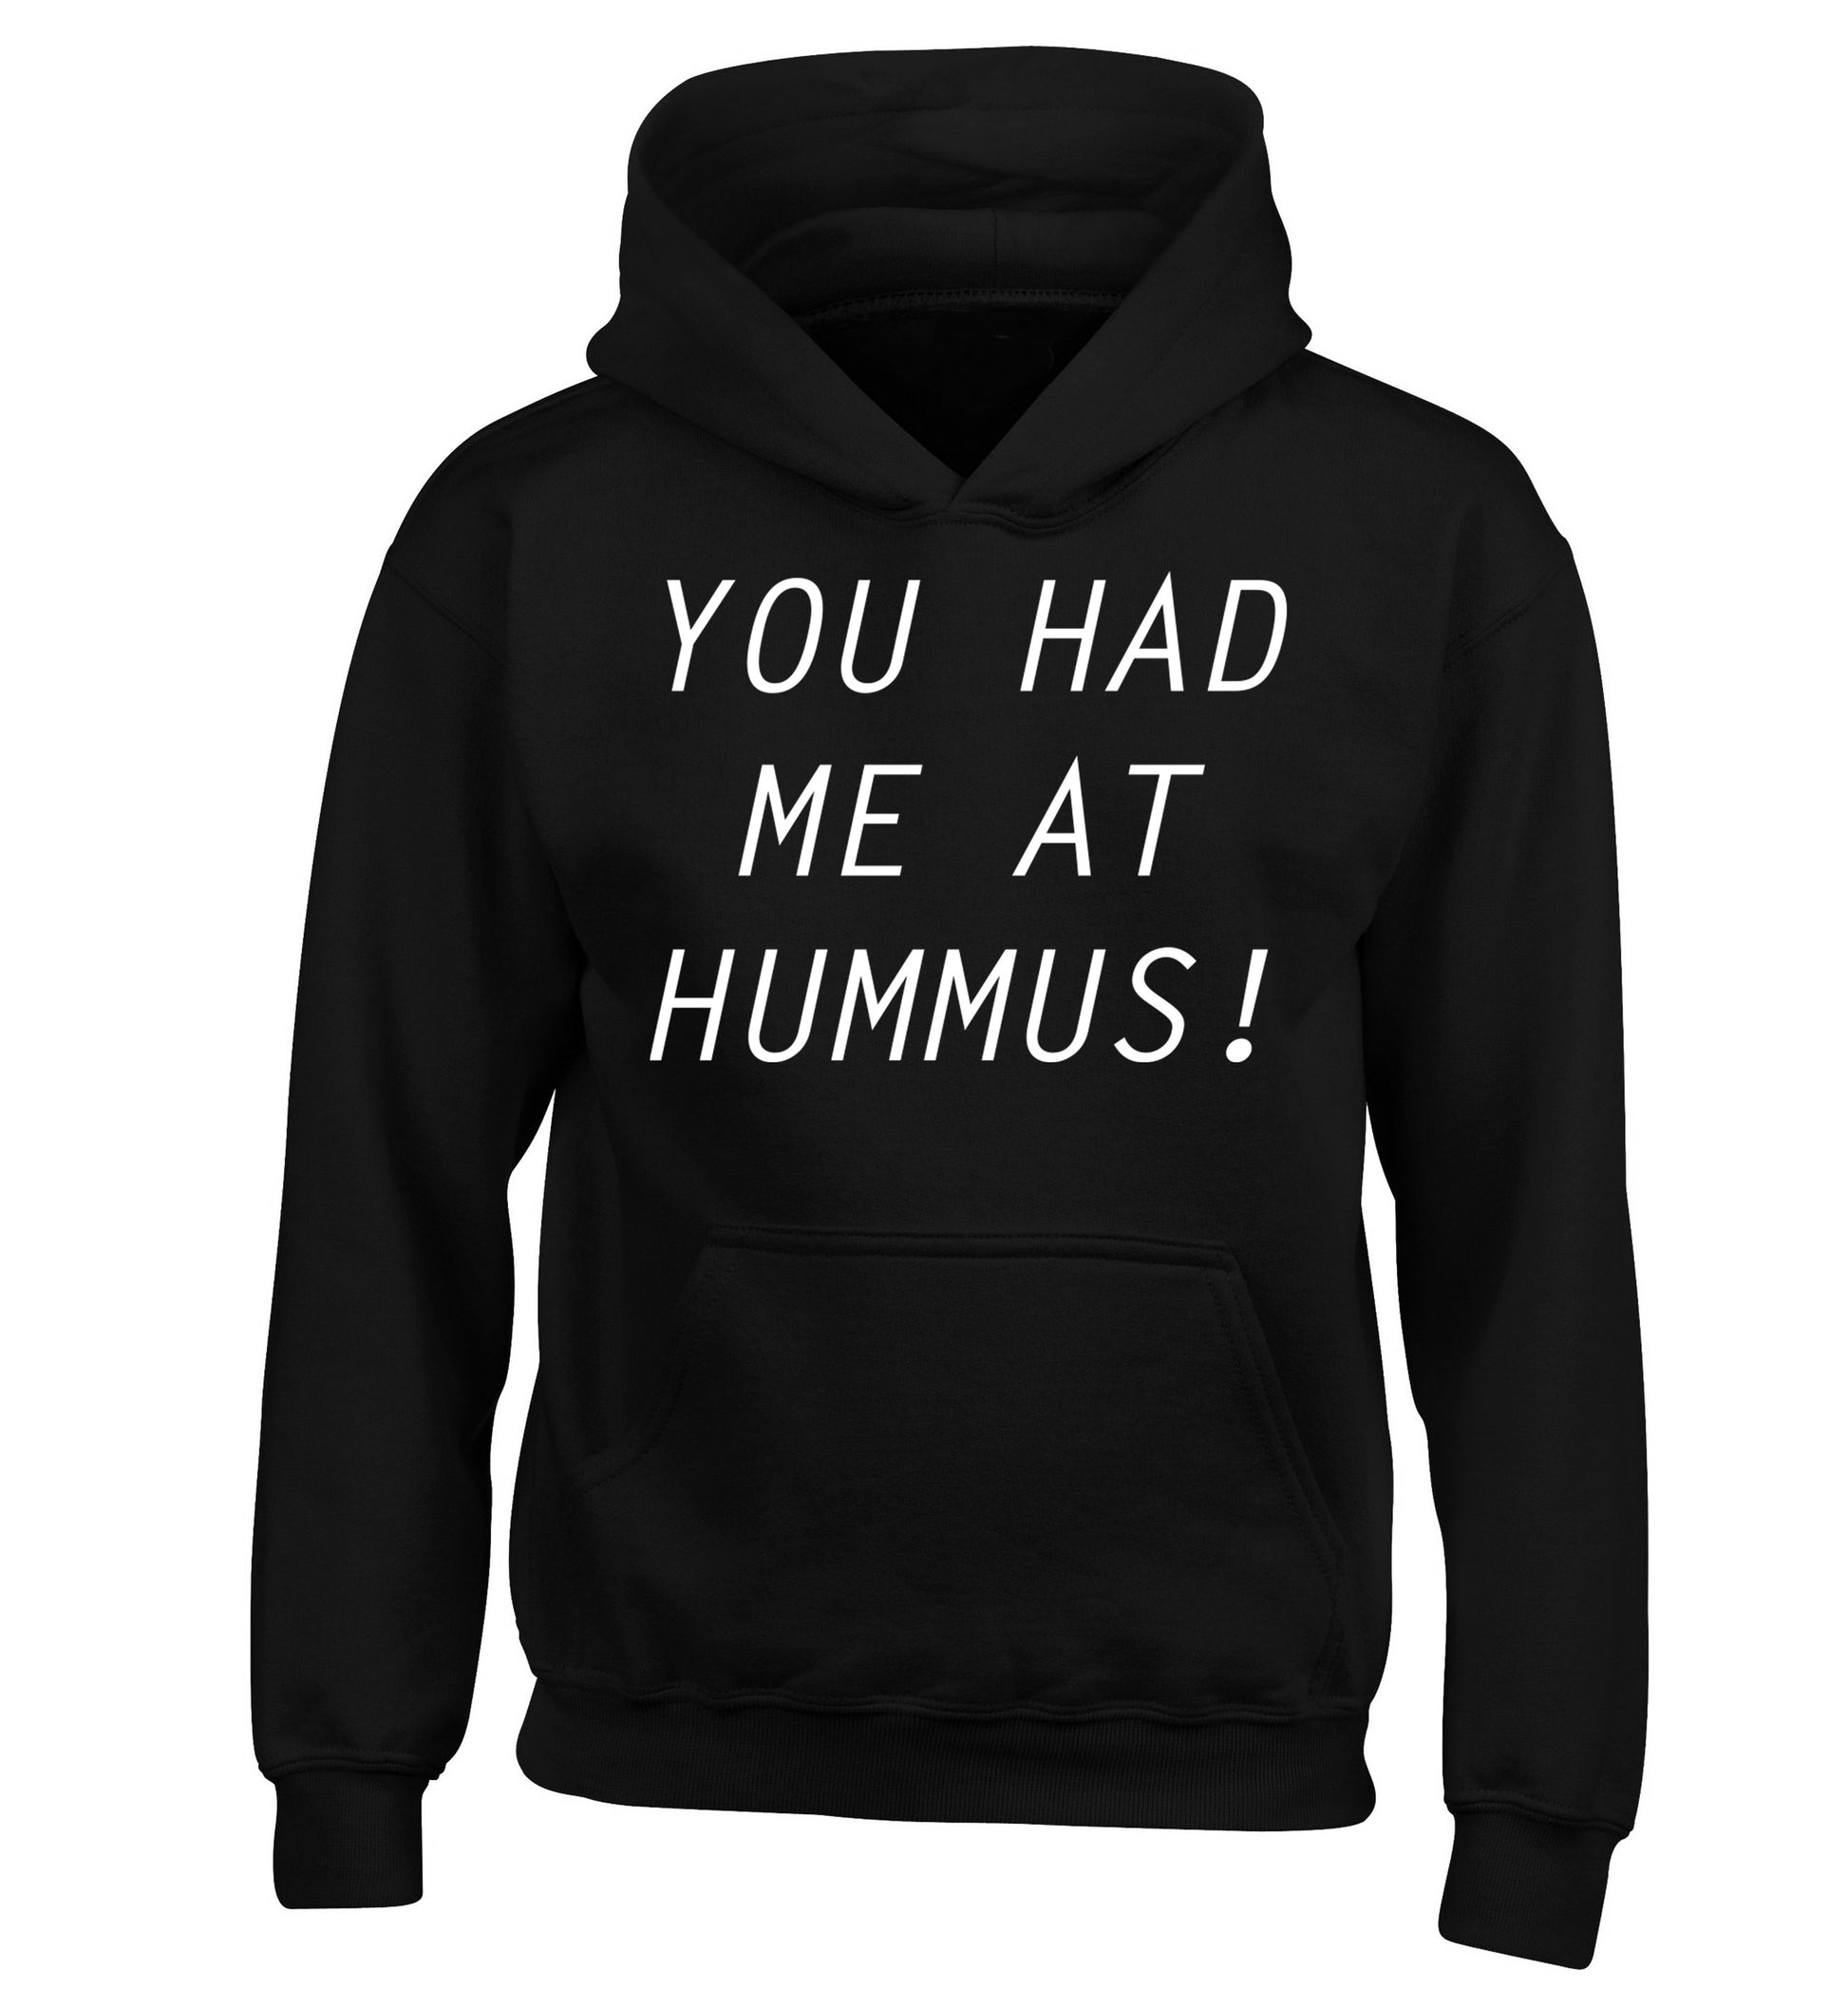 You had me at hummus children's black hoodie 12-14 Years